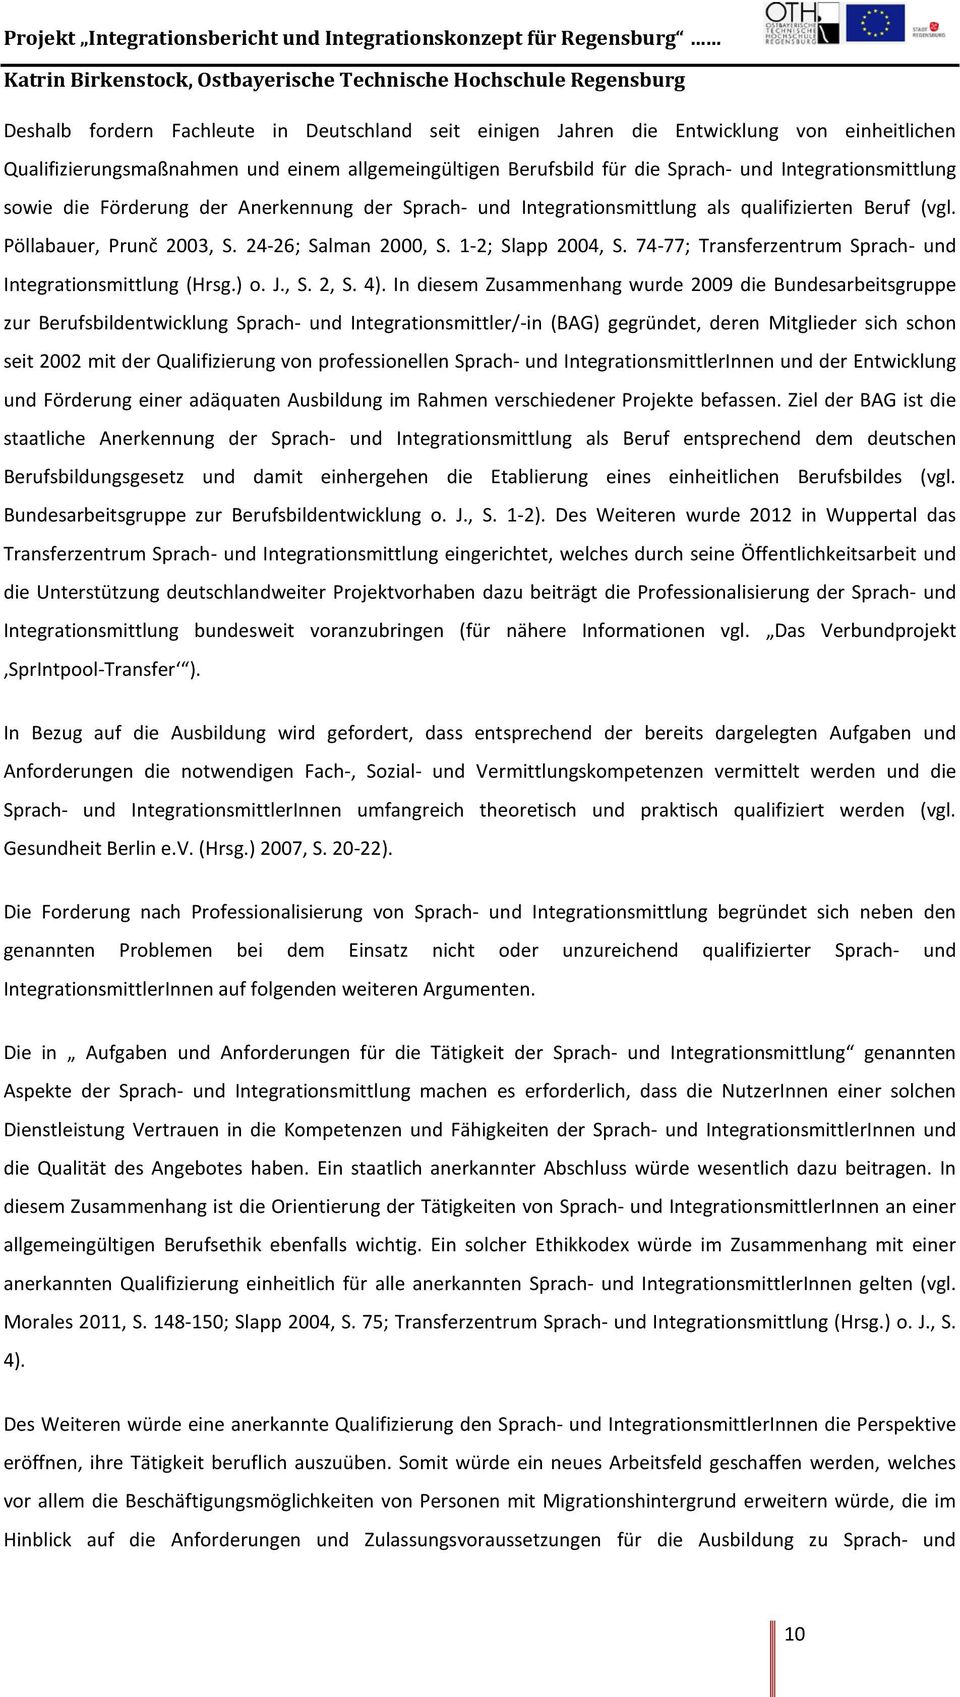 74-77; Transferzentrum Sprach- und Integrationsmittlung (Hrsg.) o. J., S. 2, S. 4).